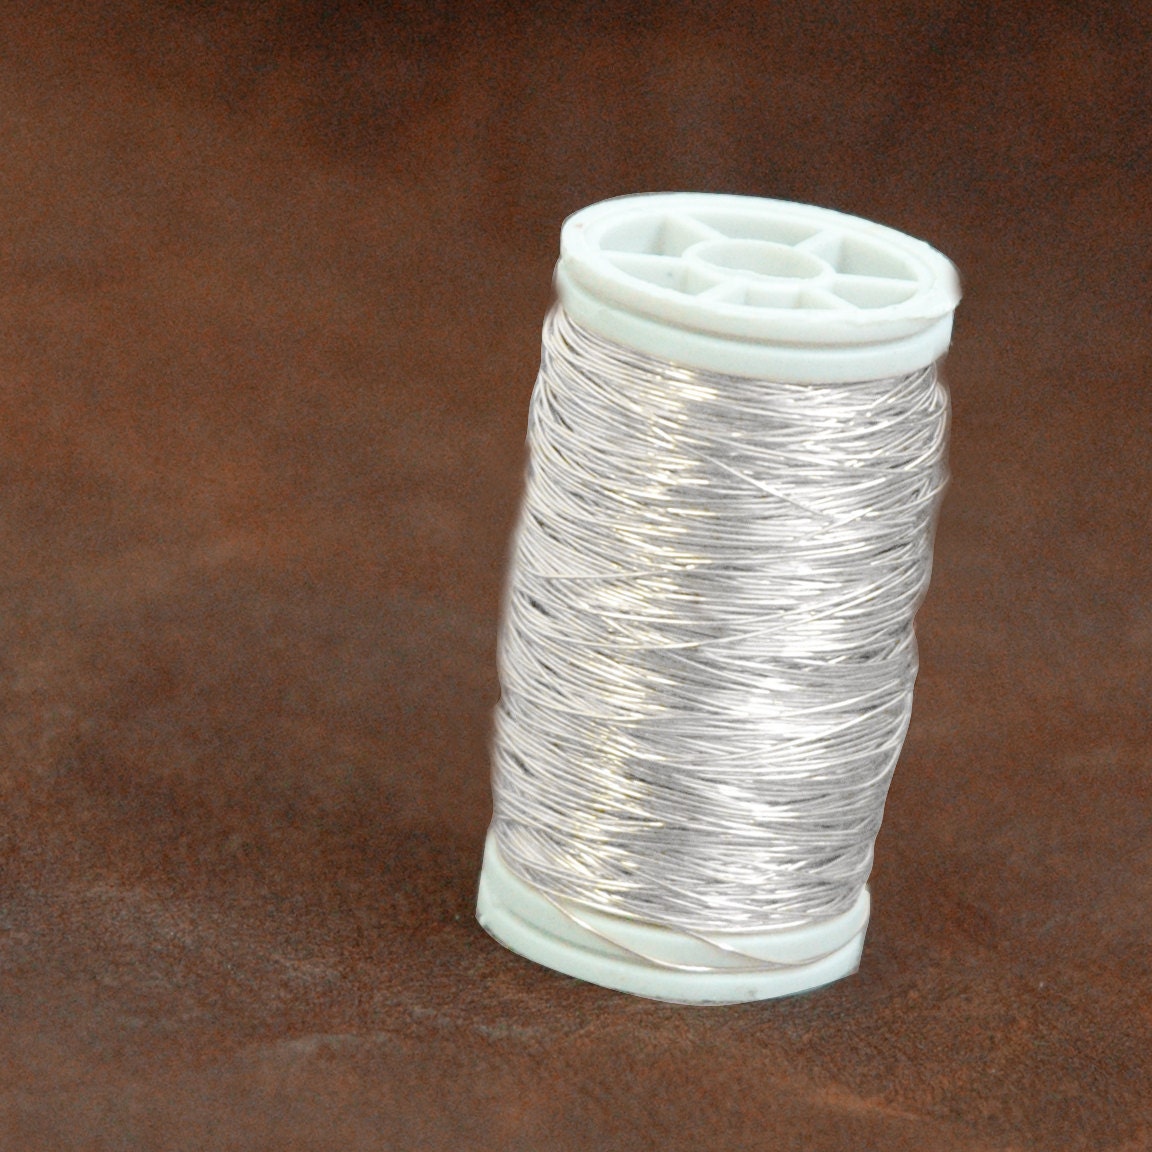 Wire crochet supply - a set of XS crochet hooks by YoolaDesign